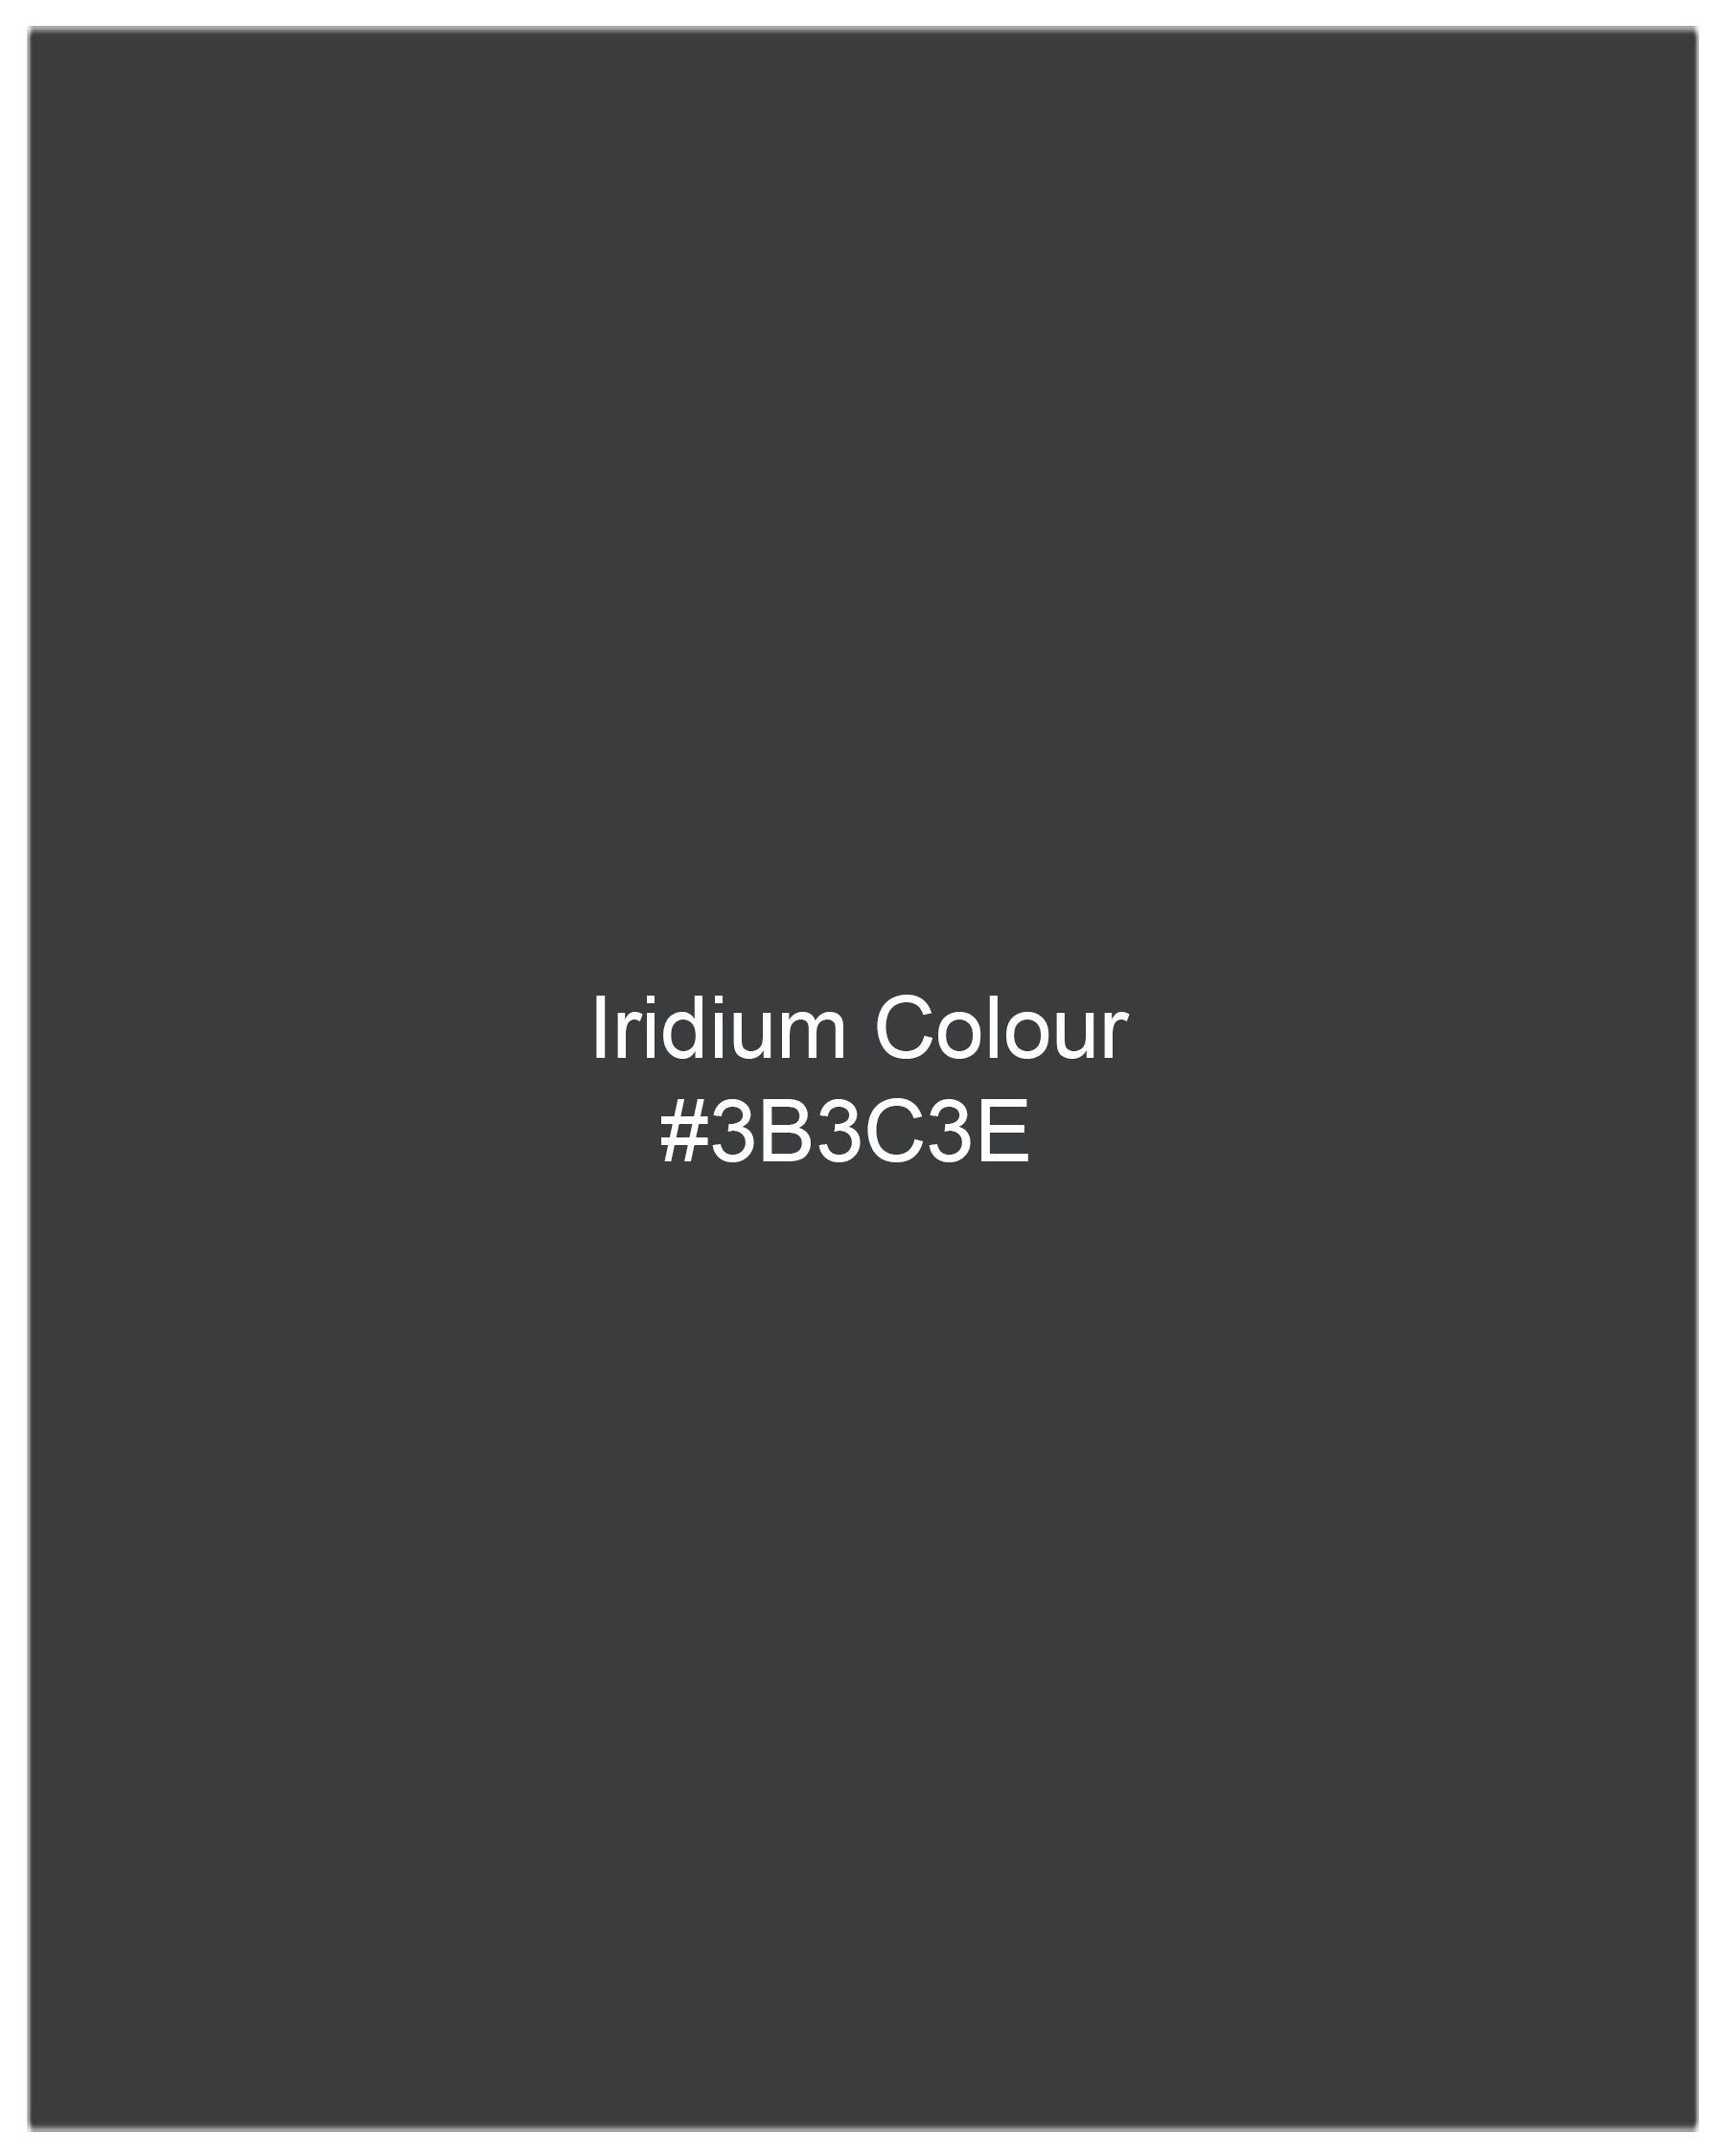 Iridium Gray Flannel Designer Over Shirt 7805-OS-P149-38, 7805-OS-P149-H-38, 7805-OS-P149-39,7805-OS-P149-H-39, 7805-OS-P149-40, 7805-OS-P149-H-40, 7805-OS-P149-42, 7805-OS-P149-H-42, 7805-OS-P149-44, 7805-OS-P149-H-44, 7805-OS-P149-46, 7805-OS-P149-H-46, 7805-OS-P149-48, 7805-OS-P149-H-48, 7805-OS-P149-50, 7805-OS-P149-H-50, 7805-OS-P149-52, 7805-OS-P149-H-52